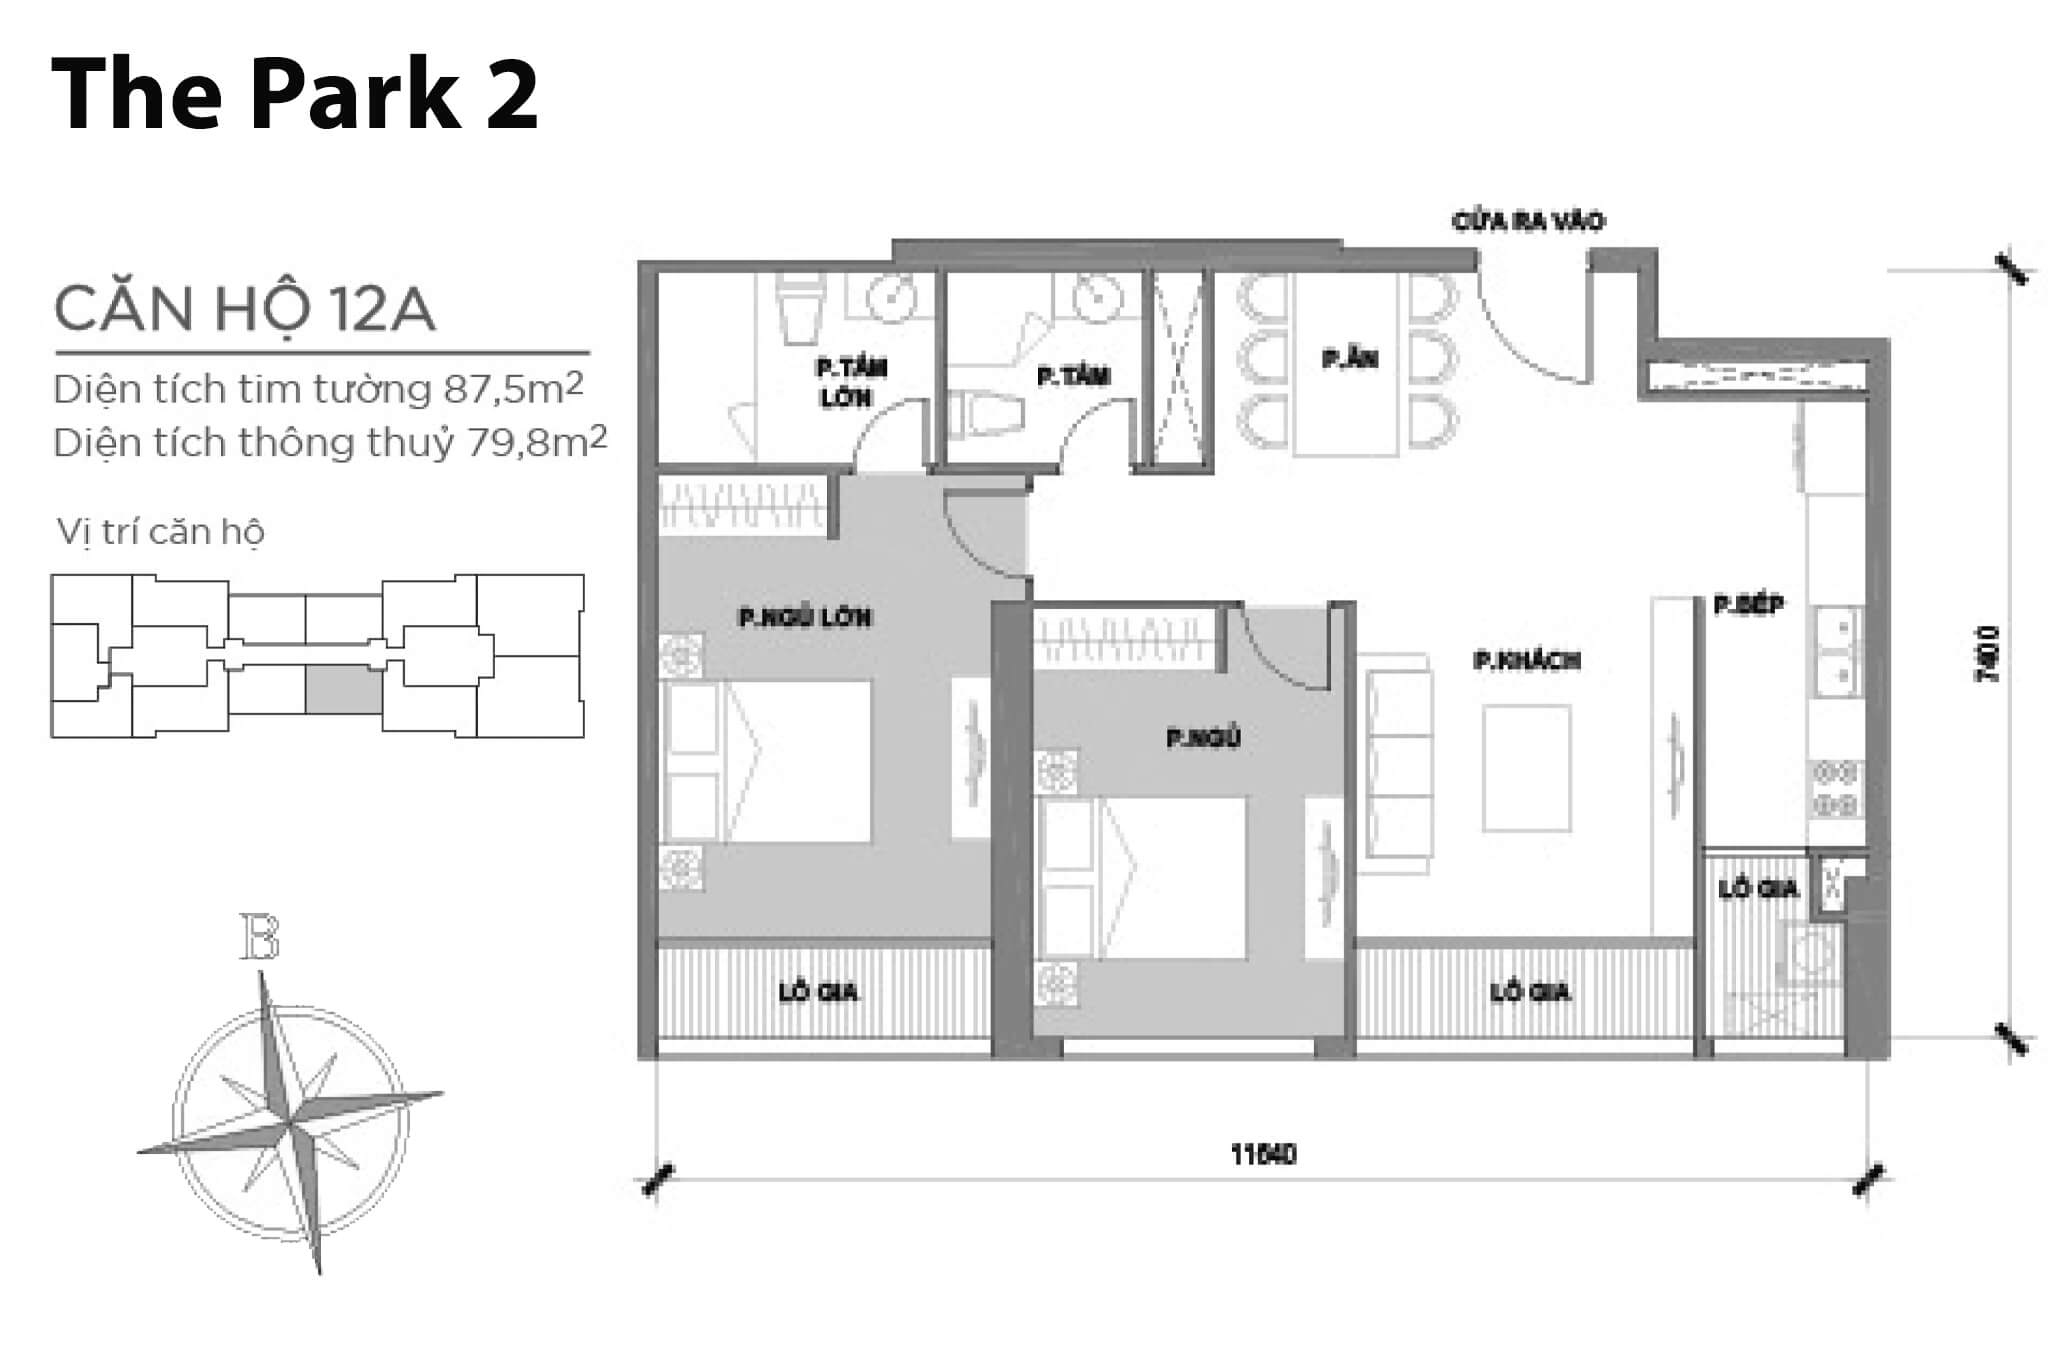 Layout căn hộ số 12A tòa The Park 2 - Mặt bằng Vinhomes Central Park